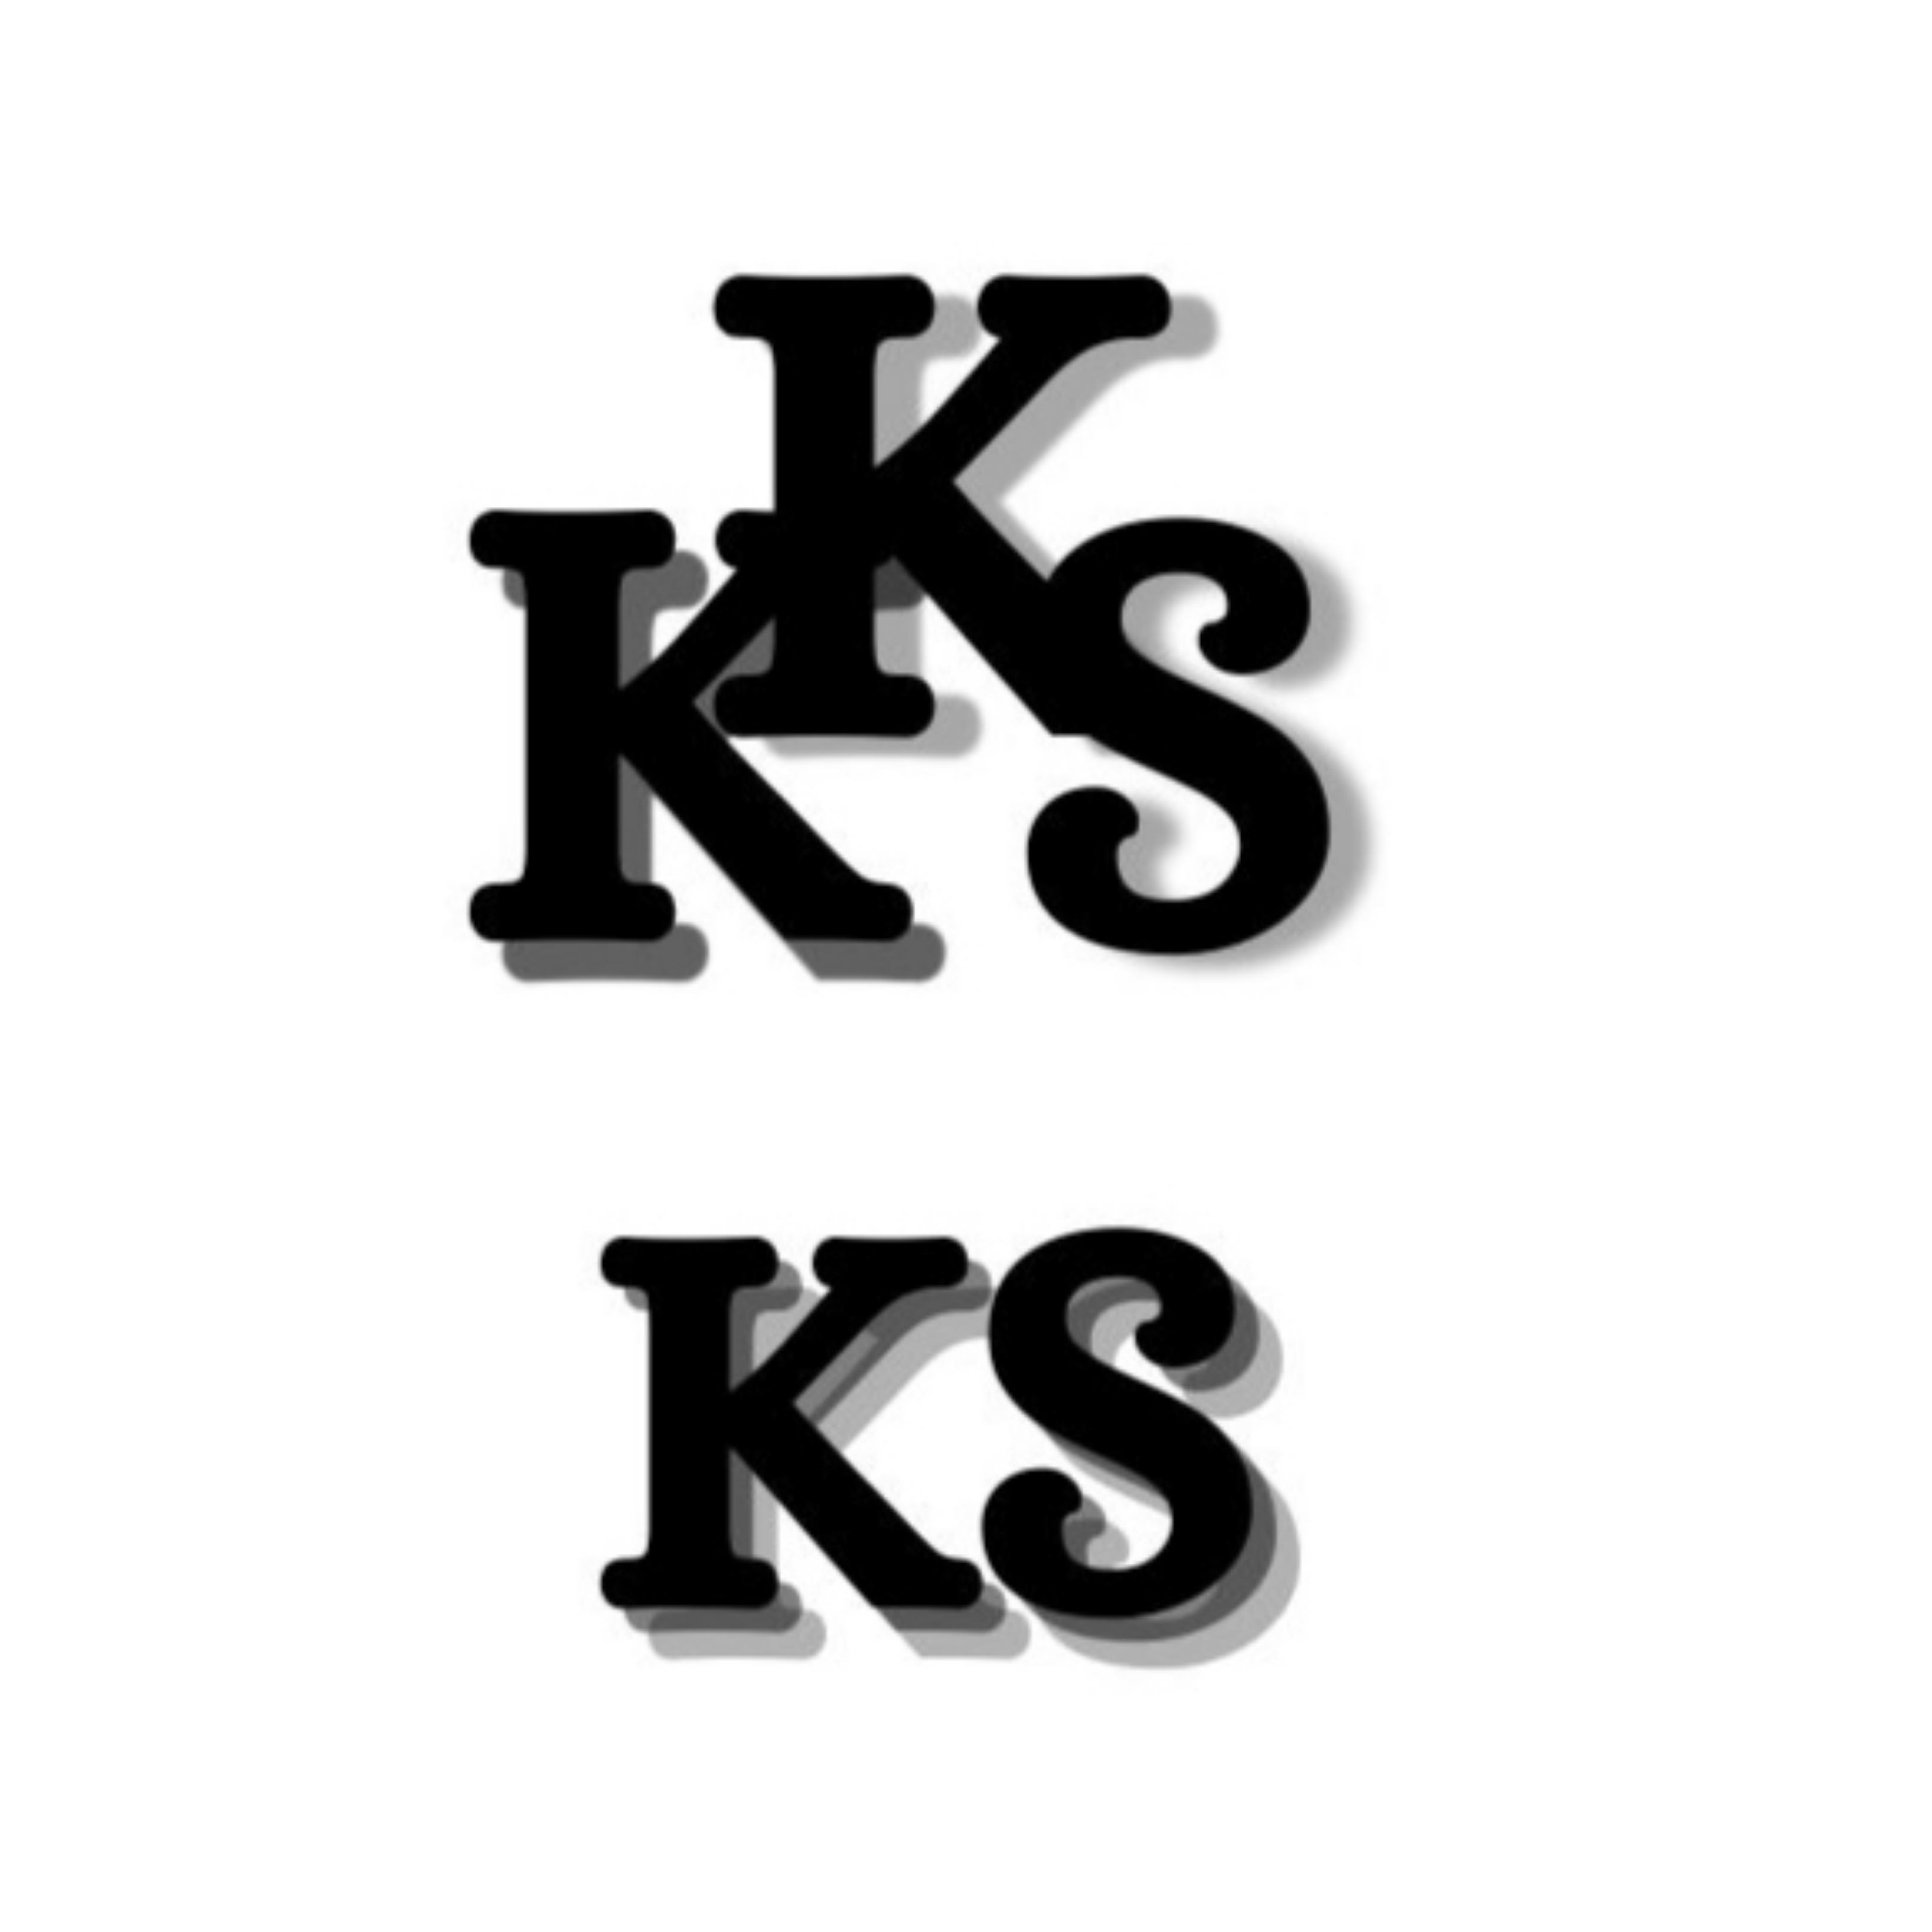 Kevin.s logo